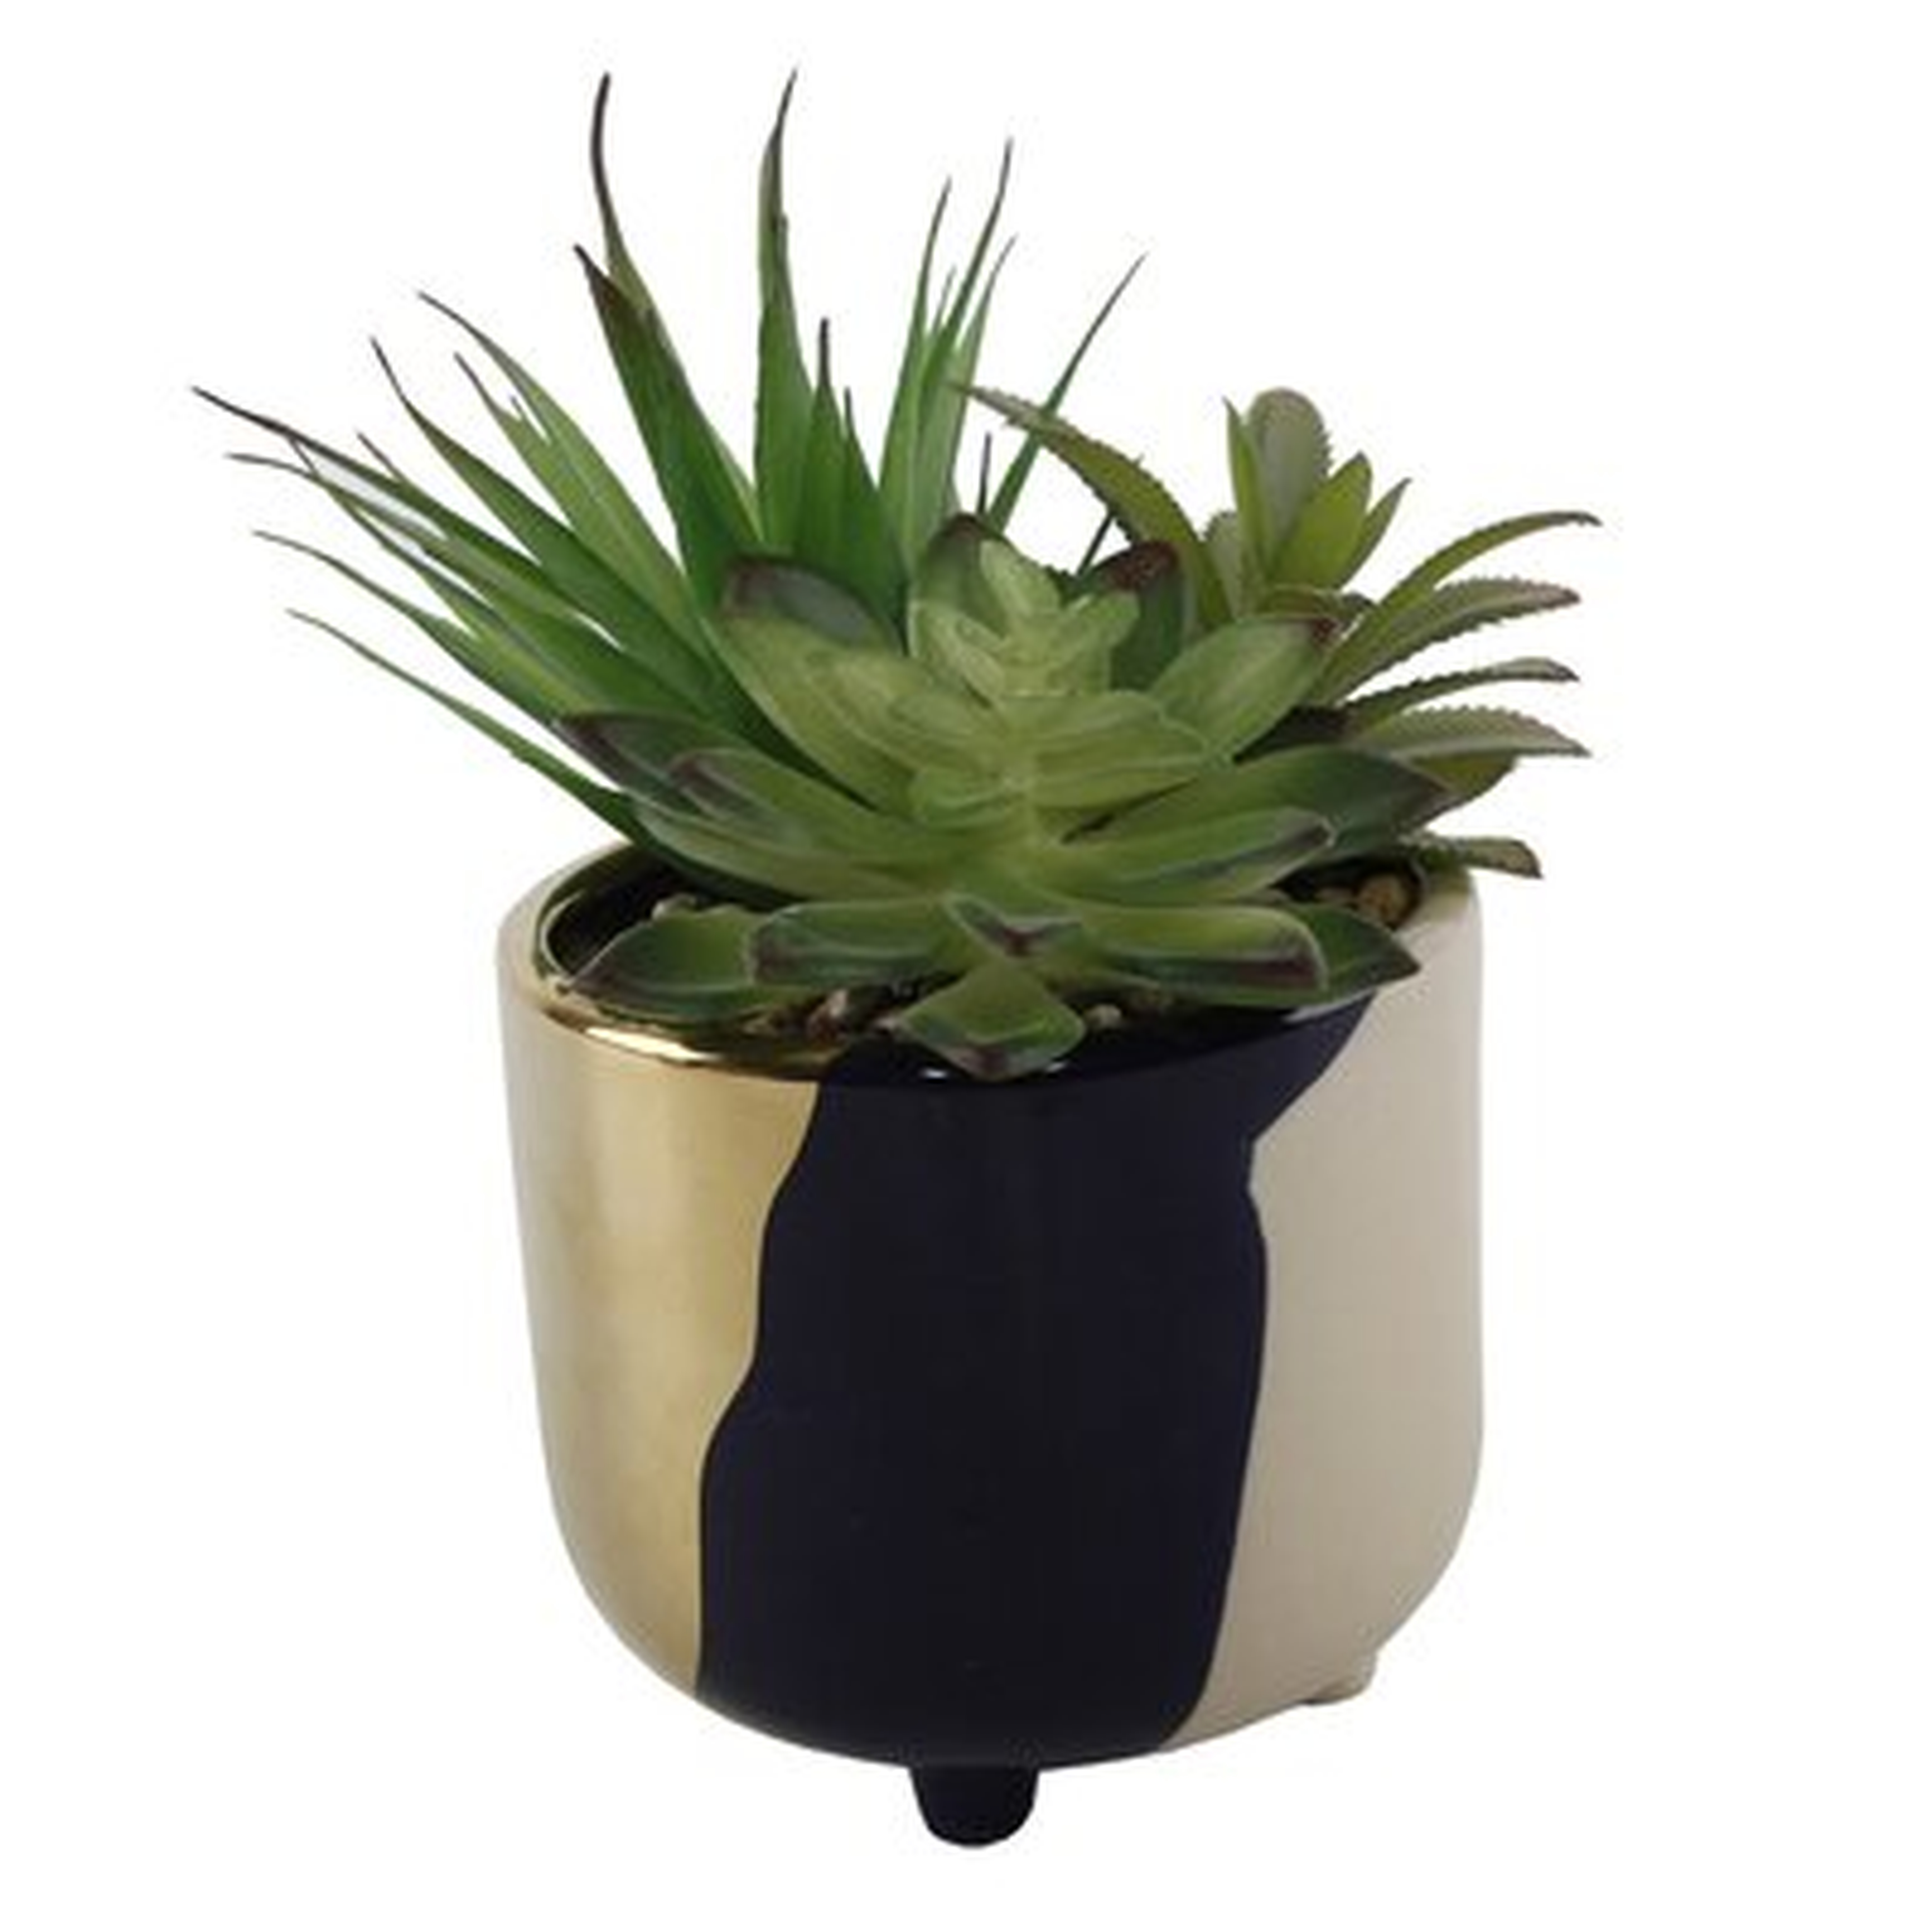 Garden Tone Footed Ceramic Cactus/Agave Succulent in Pot - Wayfair